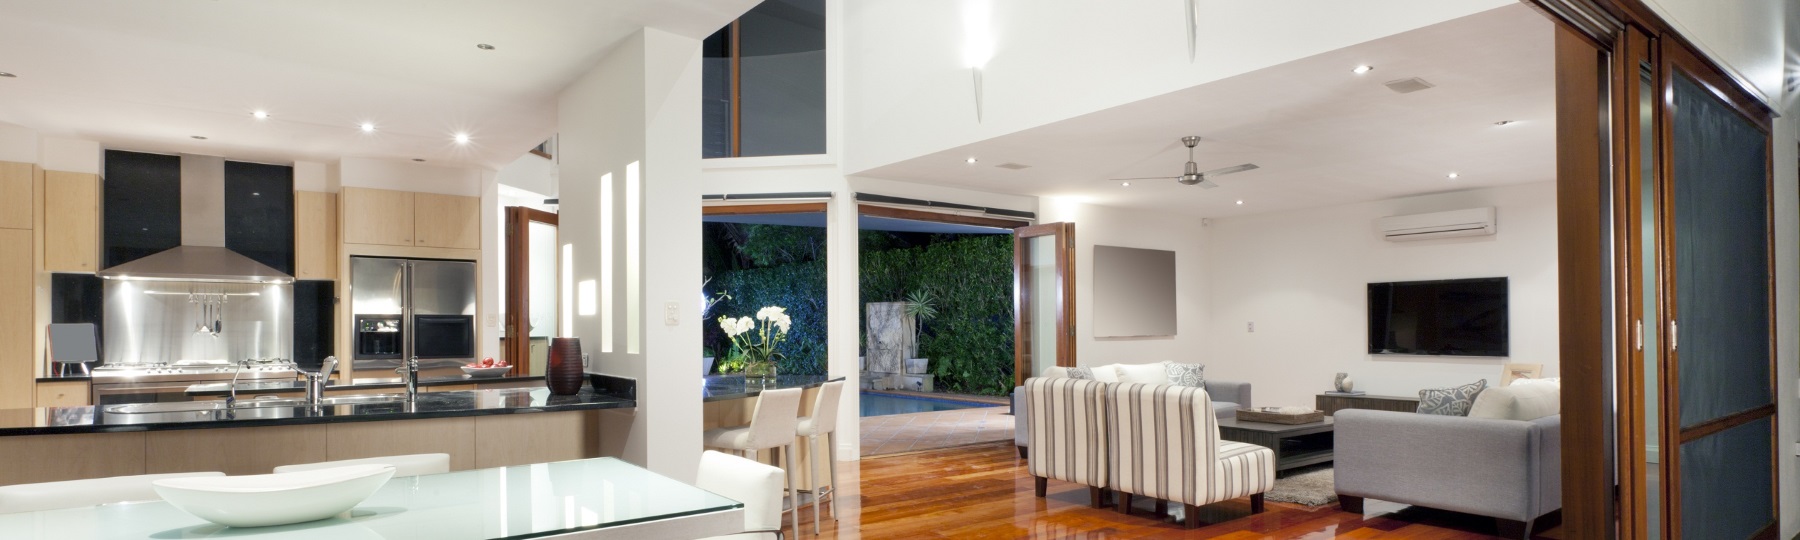 Luxurious home interior